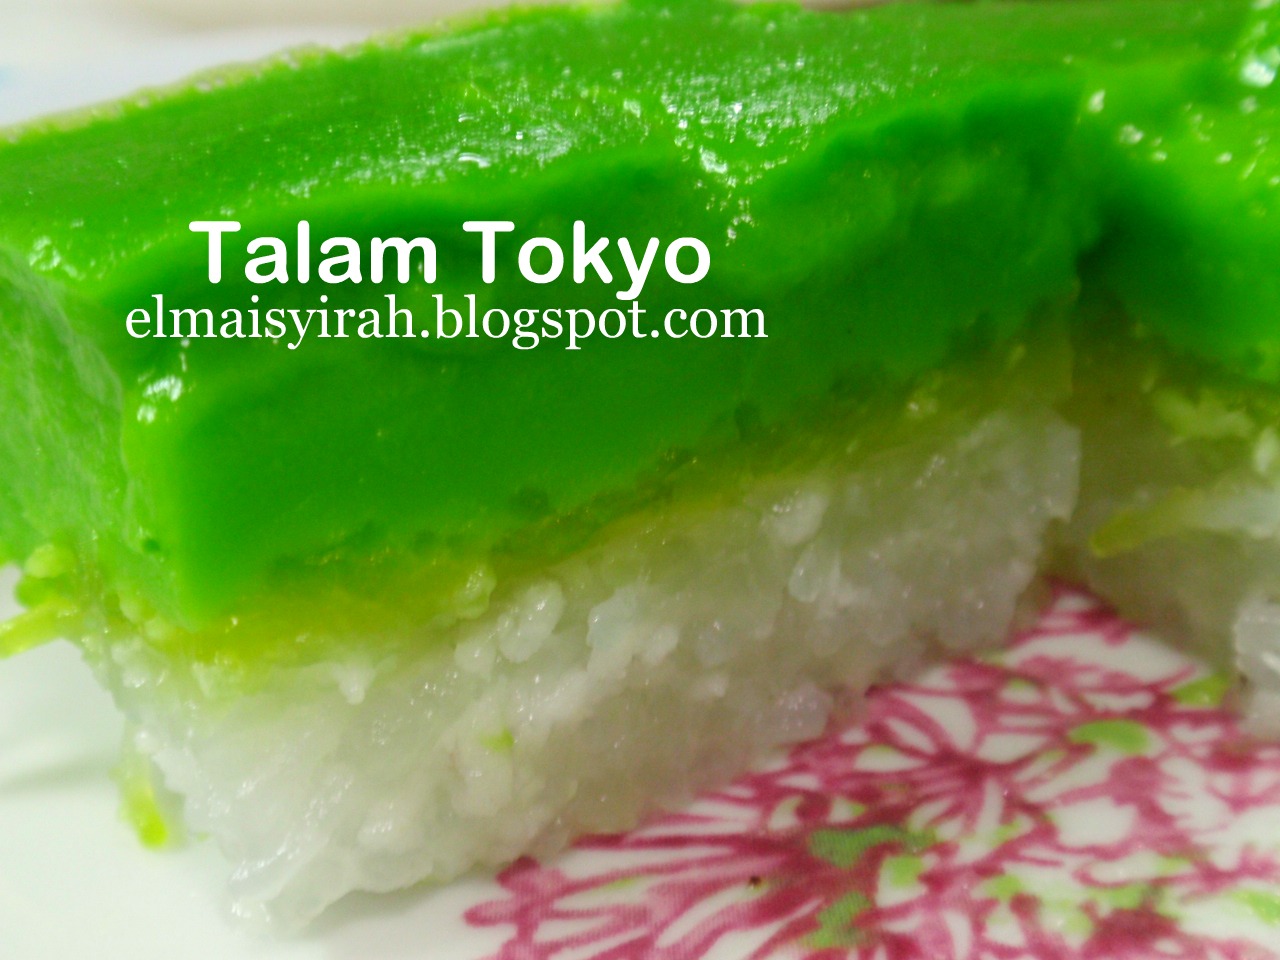 A Simple Life: Talam Tokyo